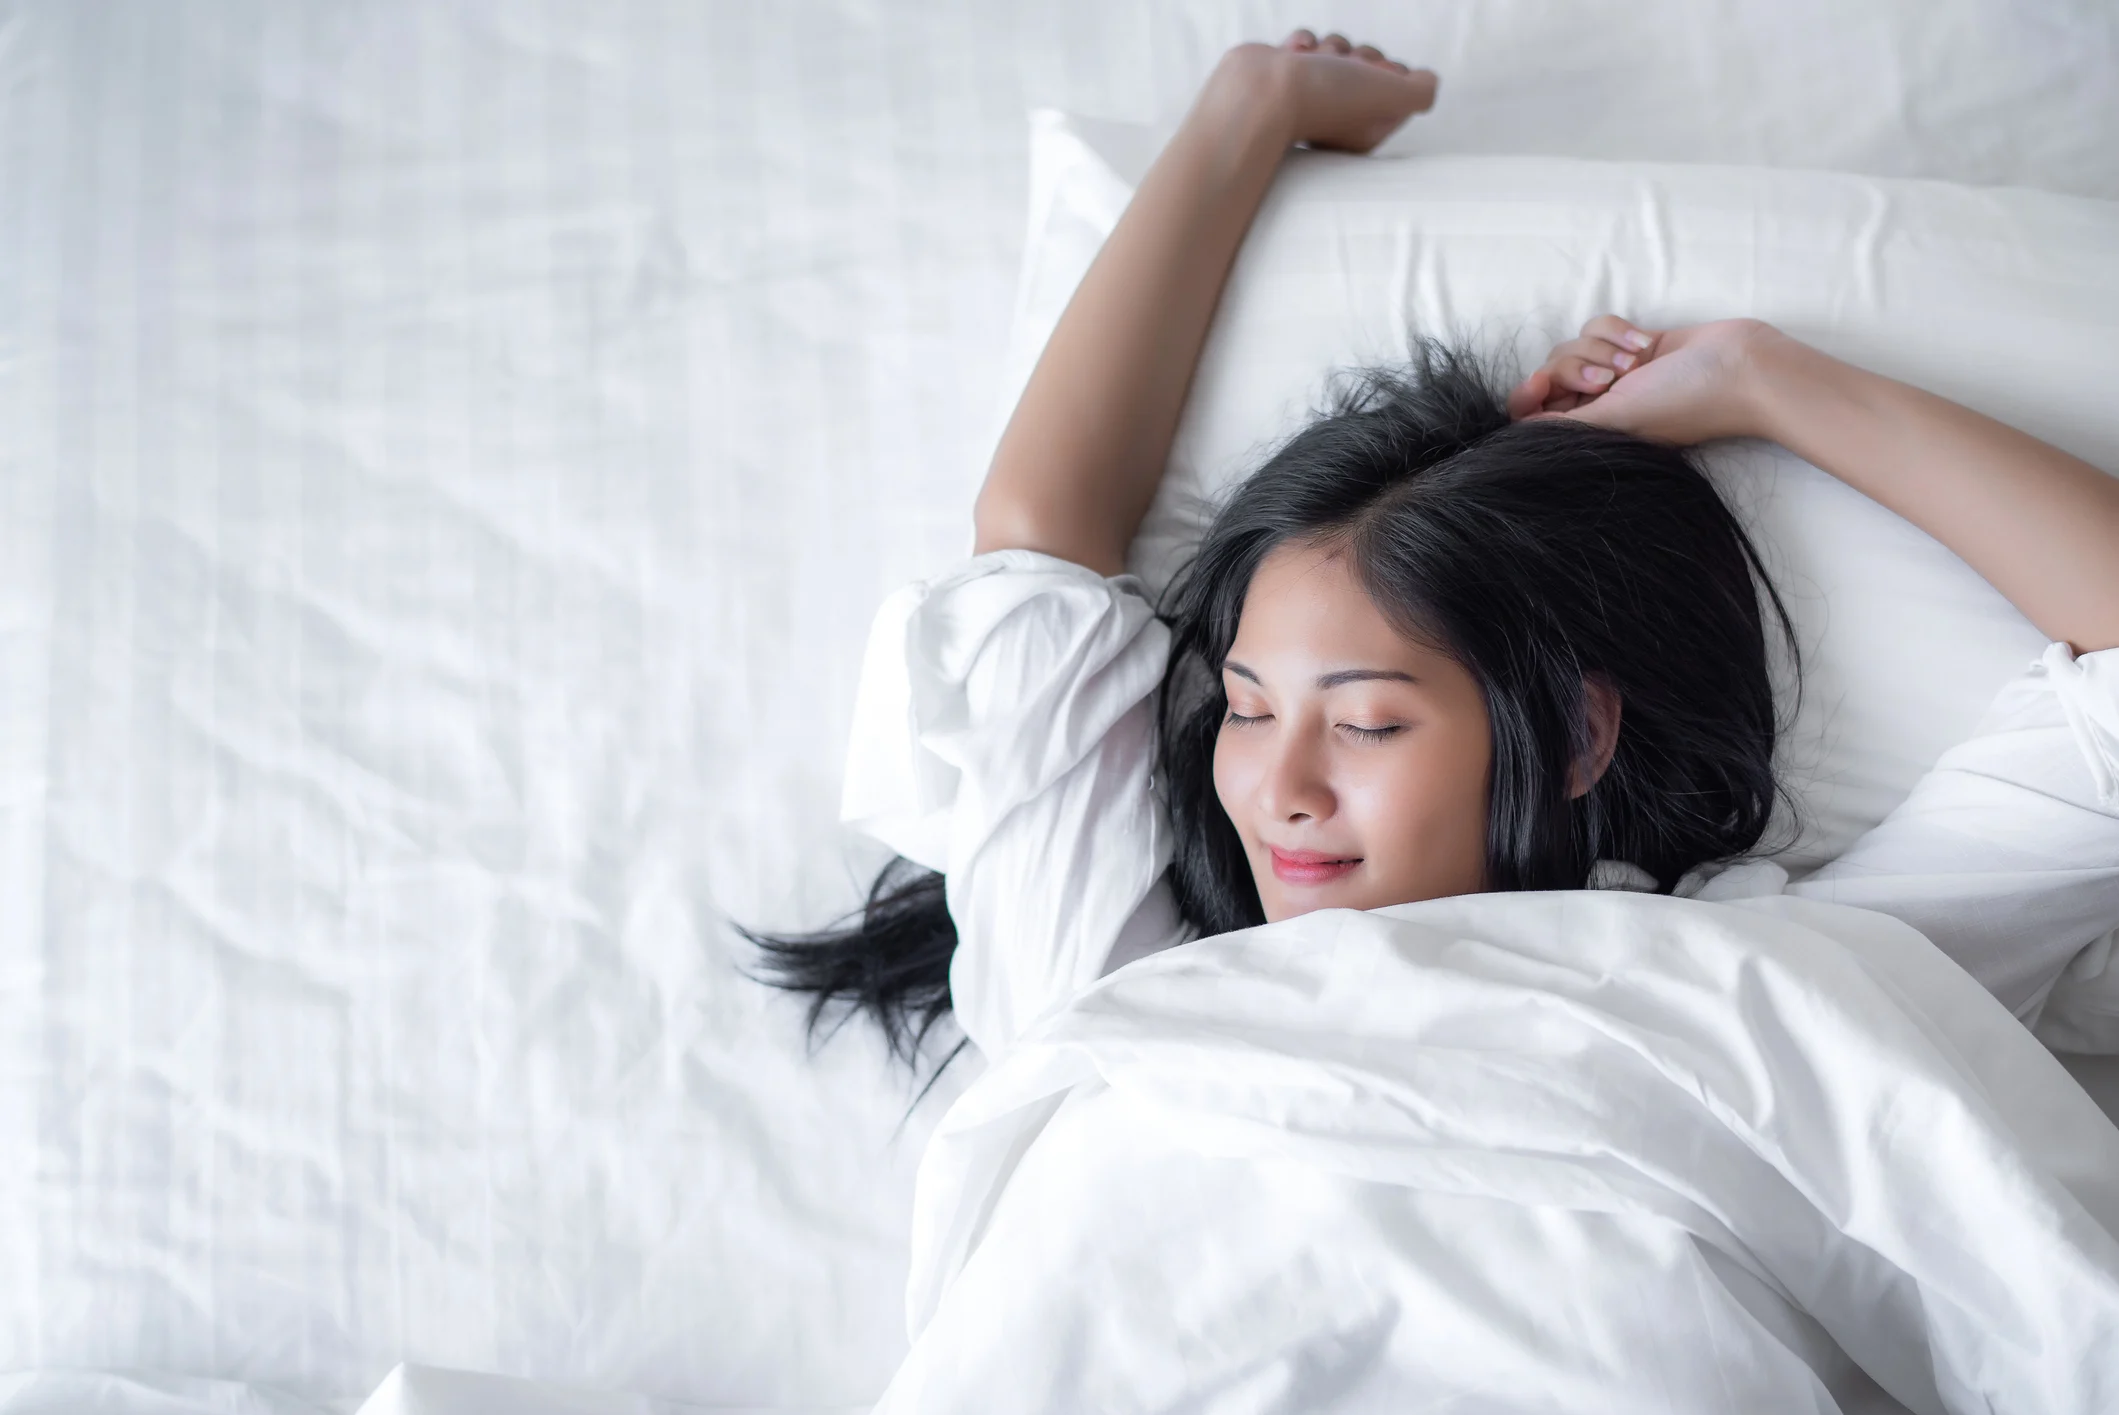 Can Cbn Really Help You Sleep?